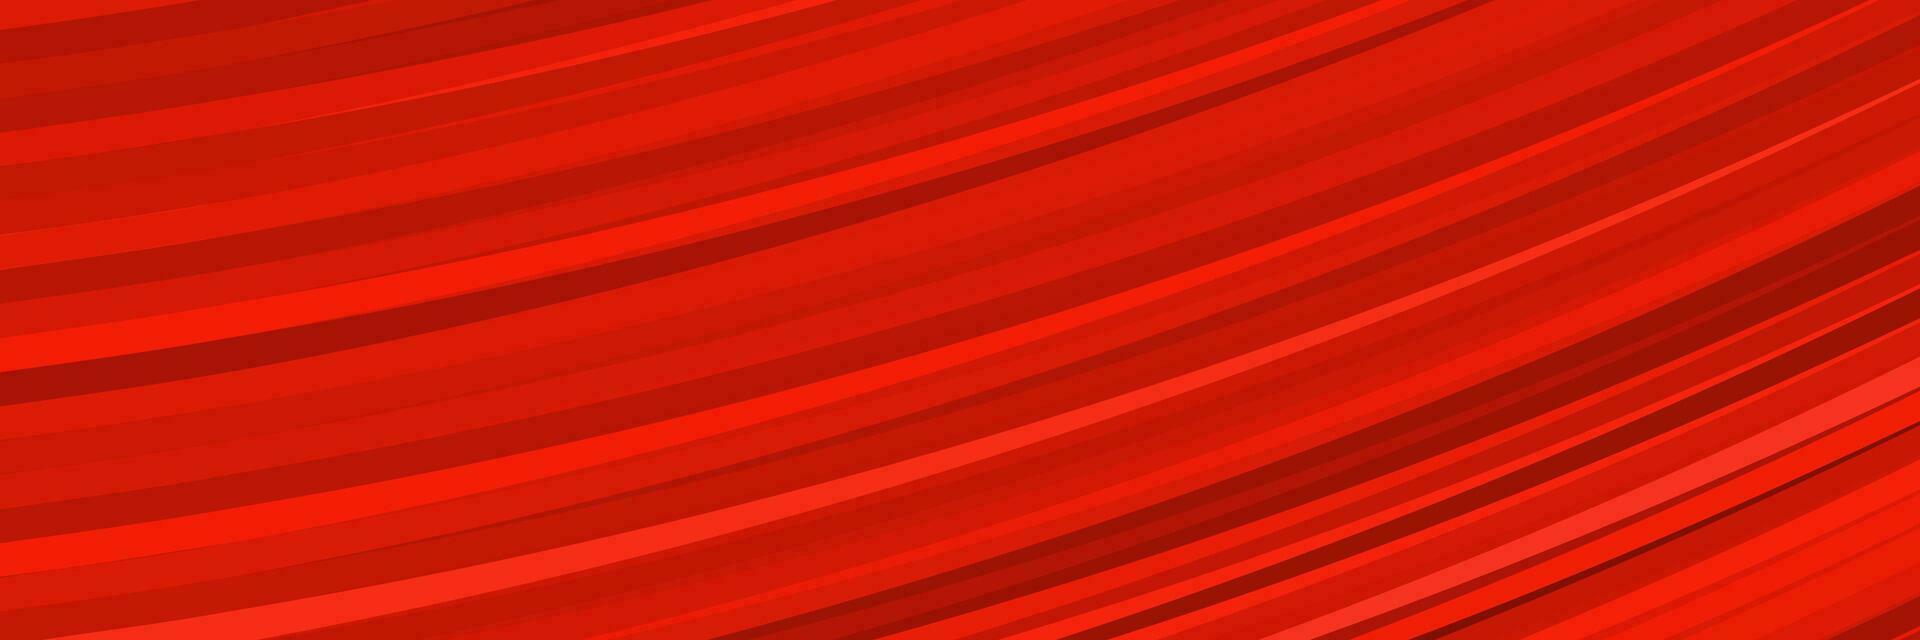 abstrato vermelho elegante vibrante fundo vetor